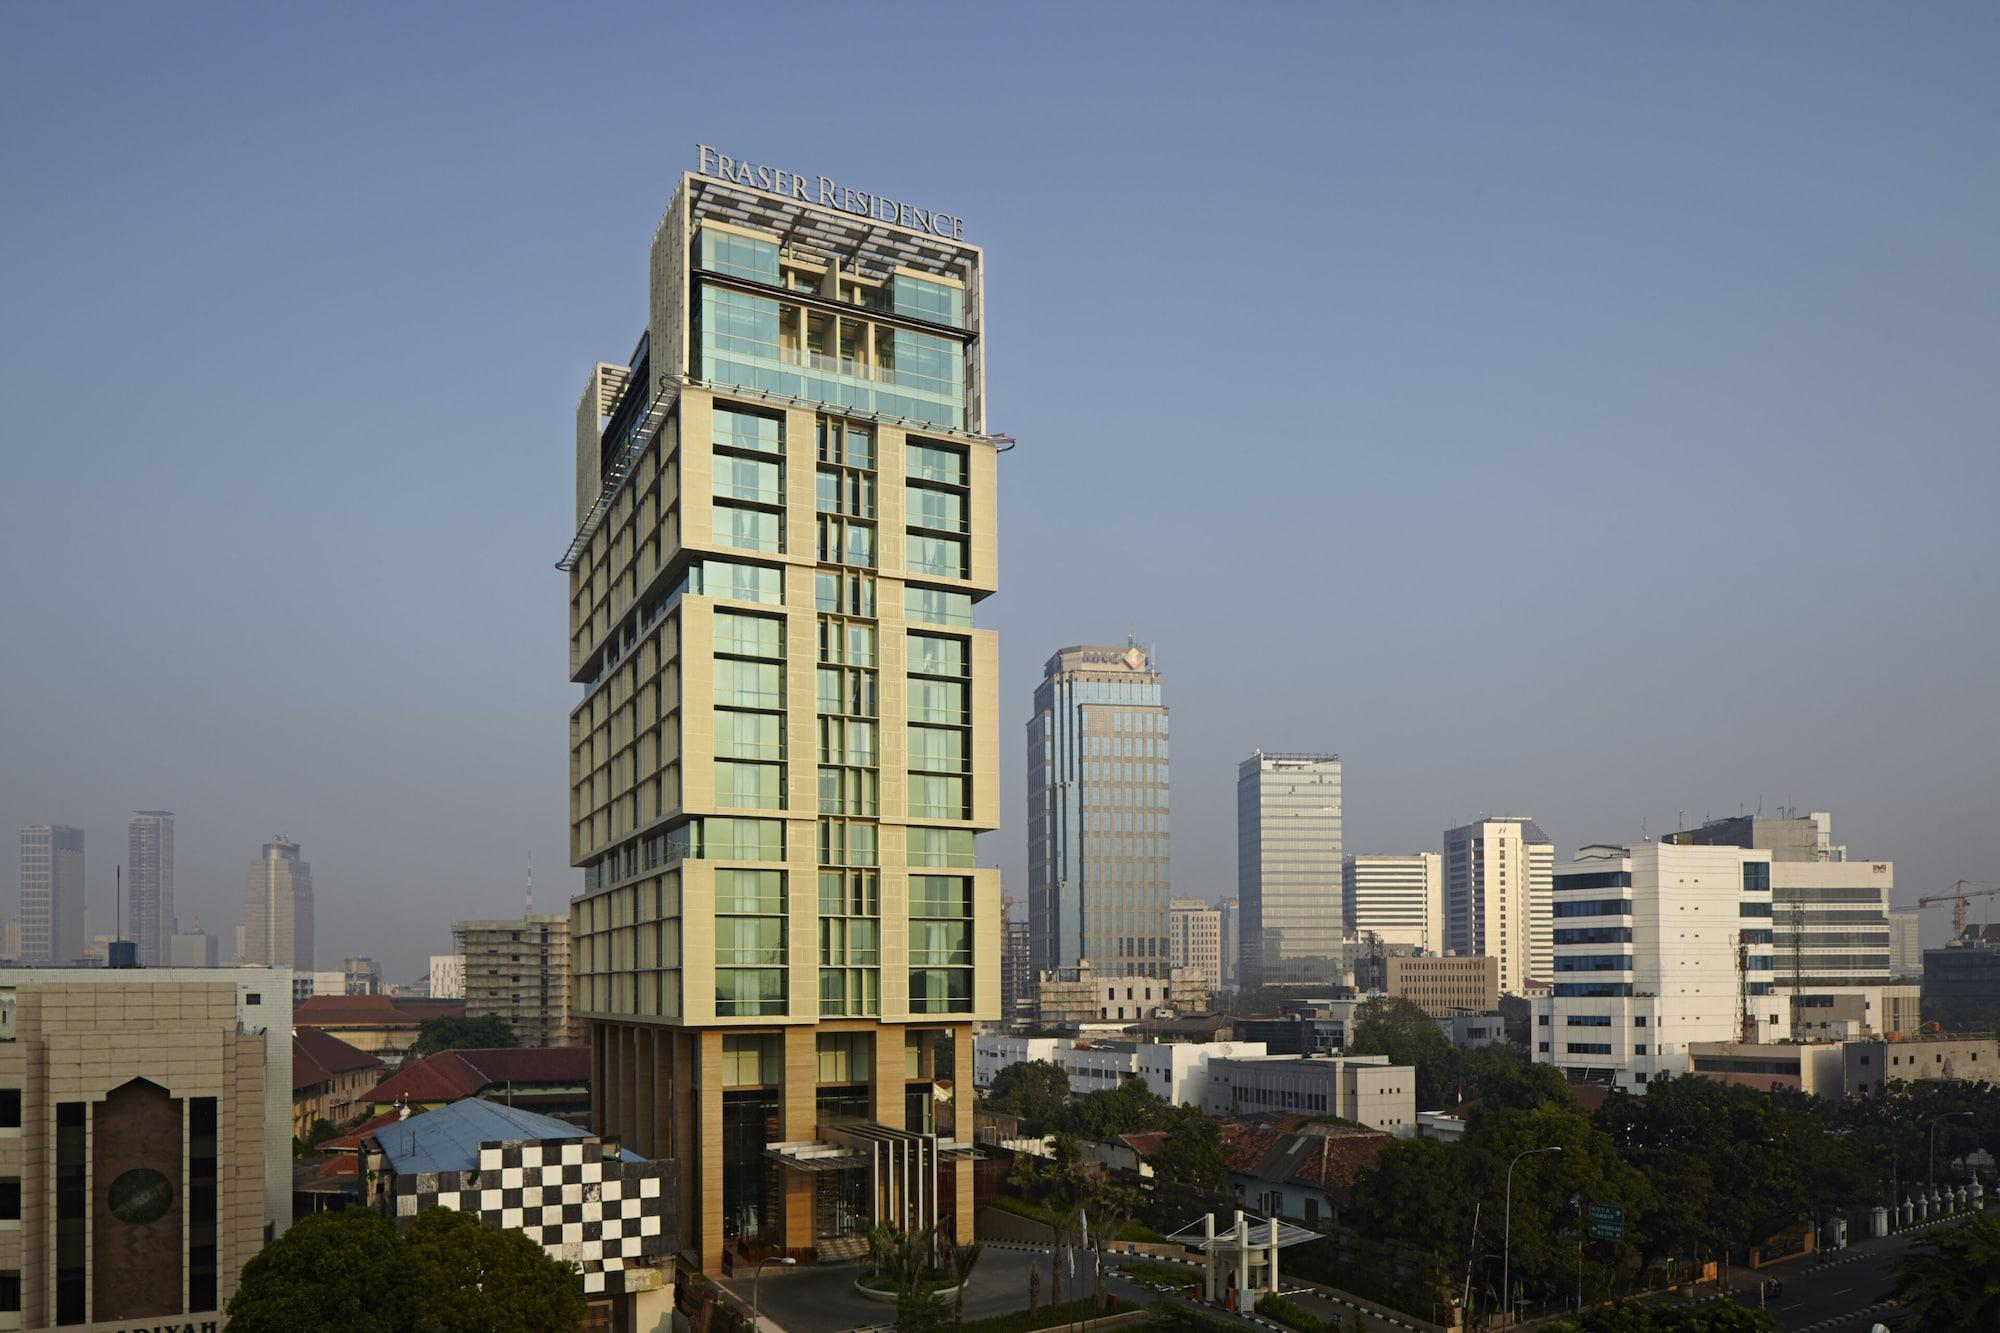 Fraser Residence Menteng Jakarta Bagian luar foto